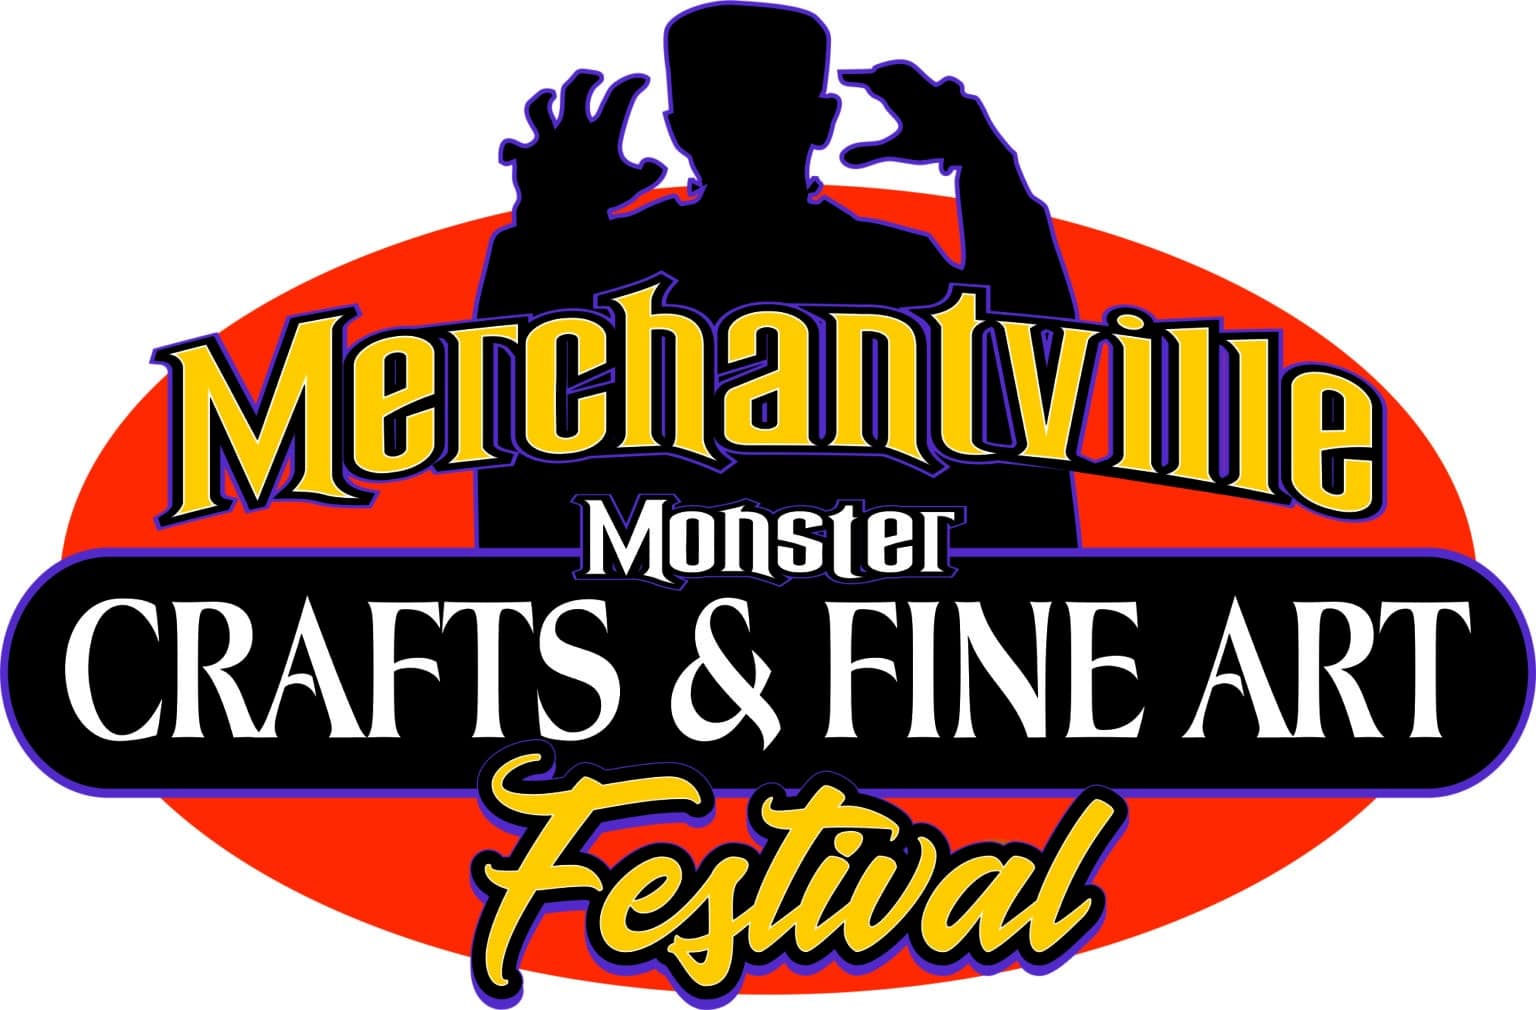 merchantville-monster-craft-and-fine-art-festival-visit-south-jersey